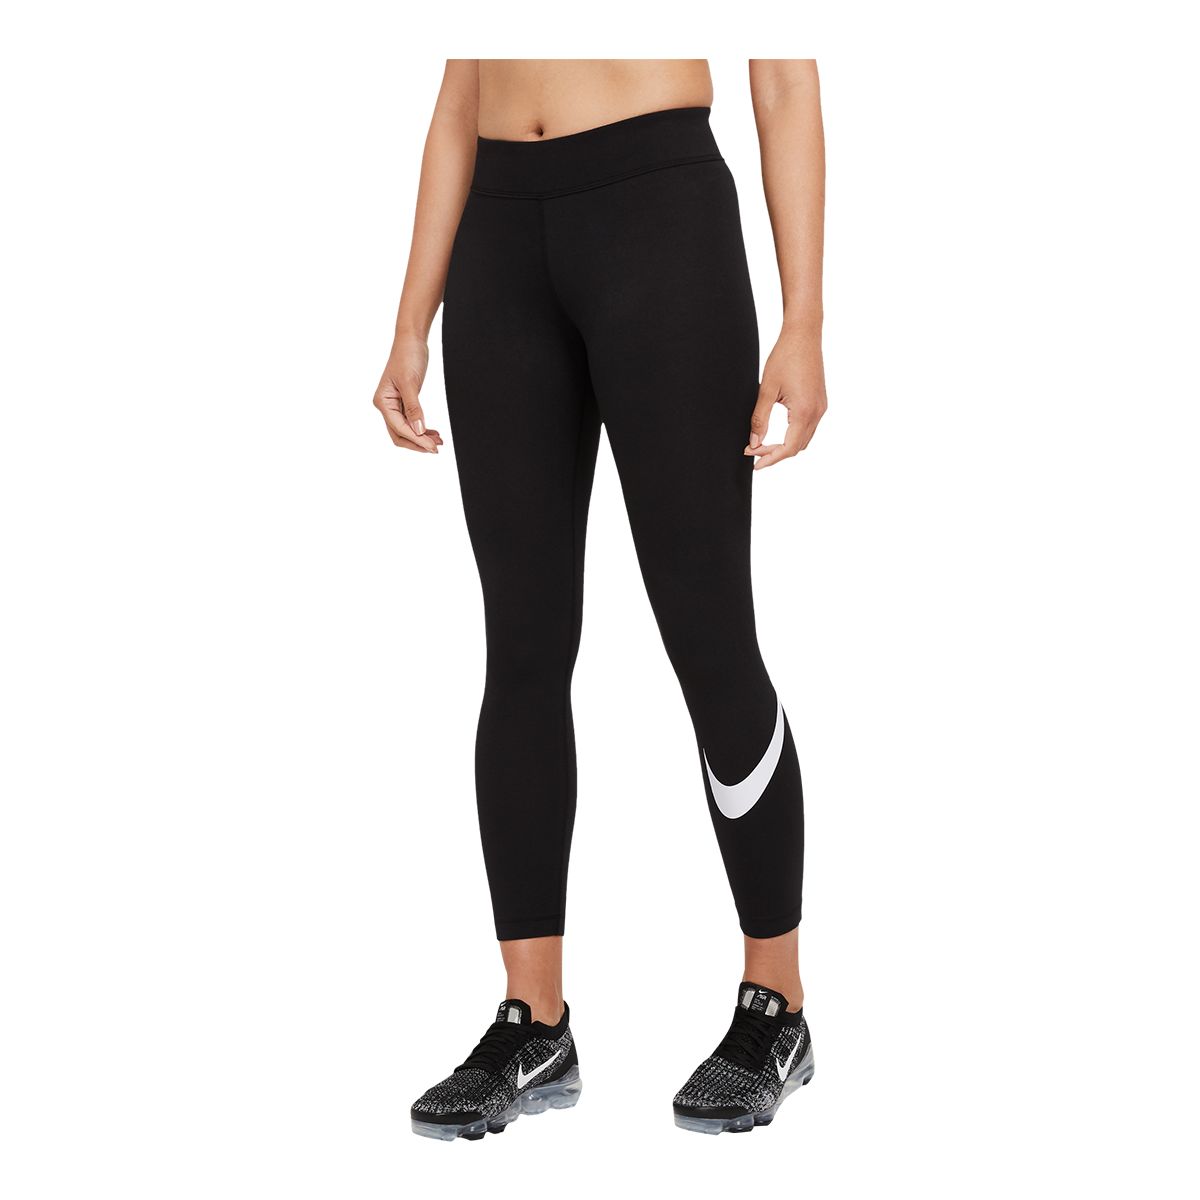 Nike Womens Essential Swoosh Leggings - Red